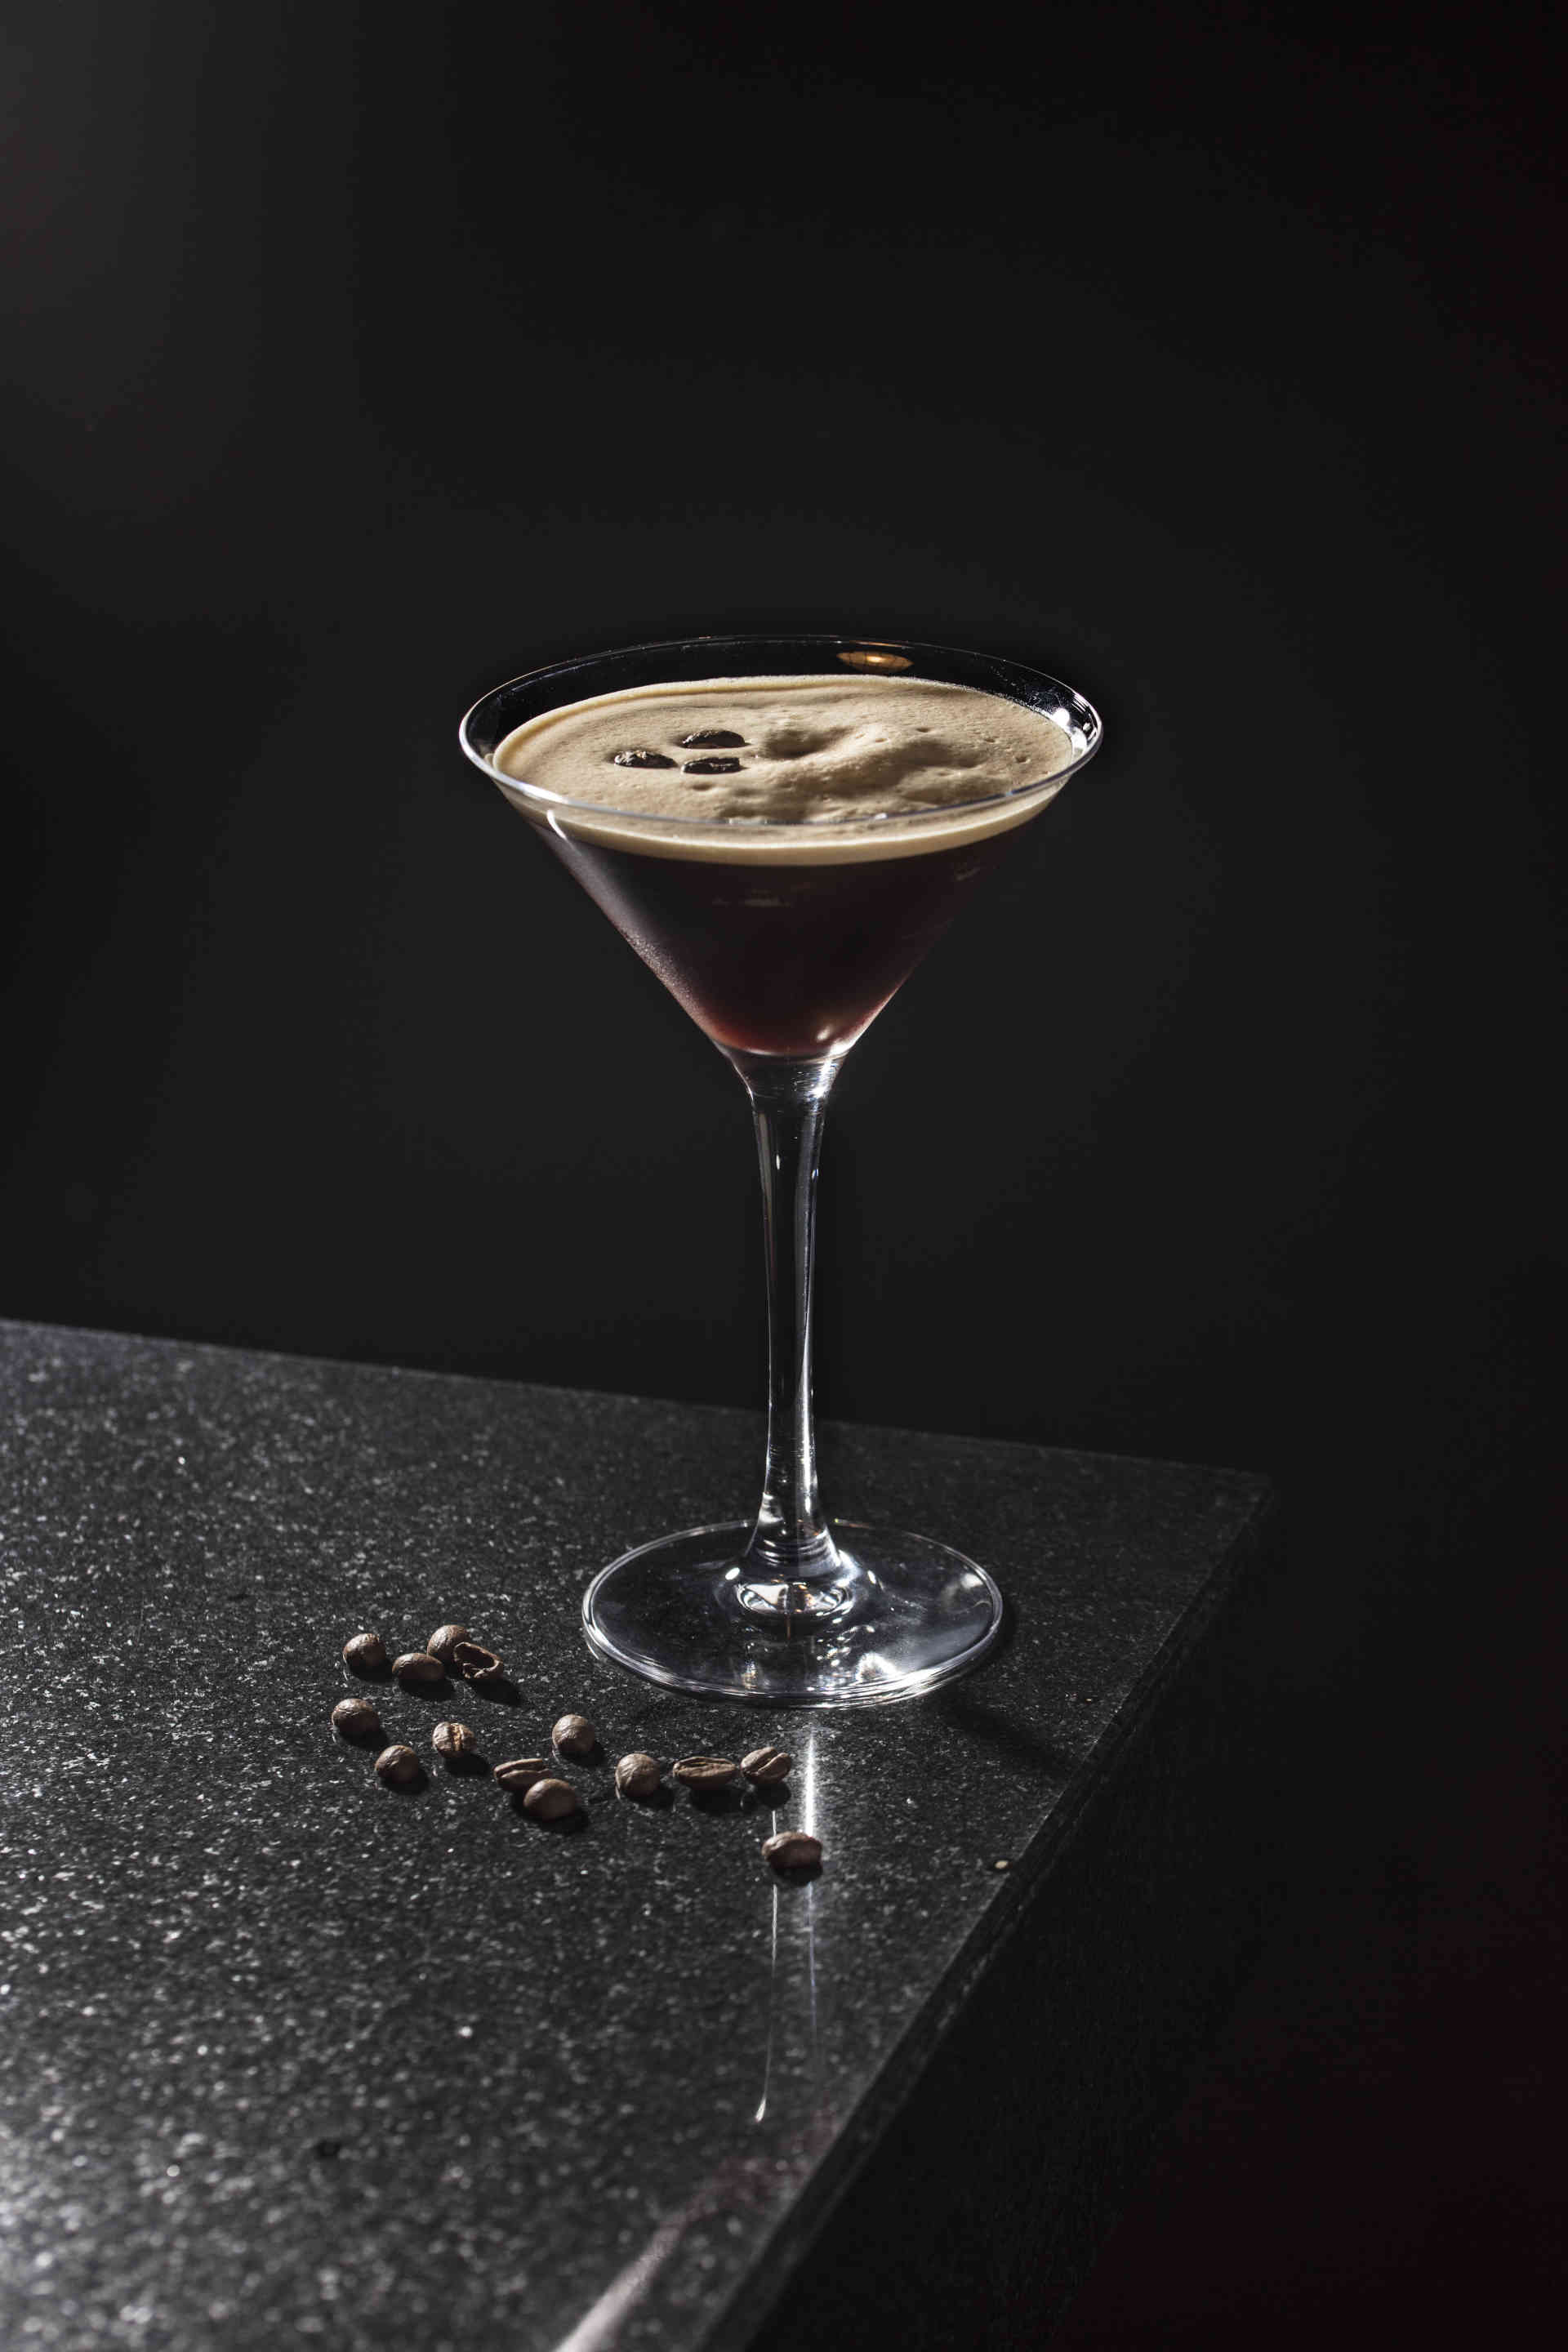 martini glass of Tiramisu Creamy Martini on the edge of a stone surface with loose coffee beans